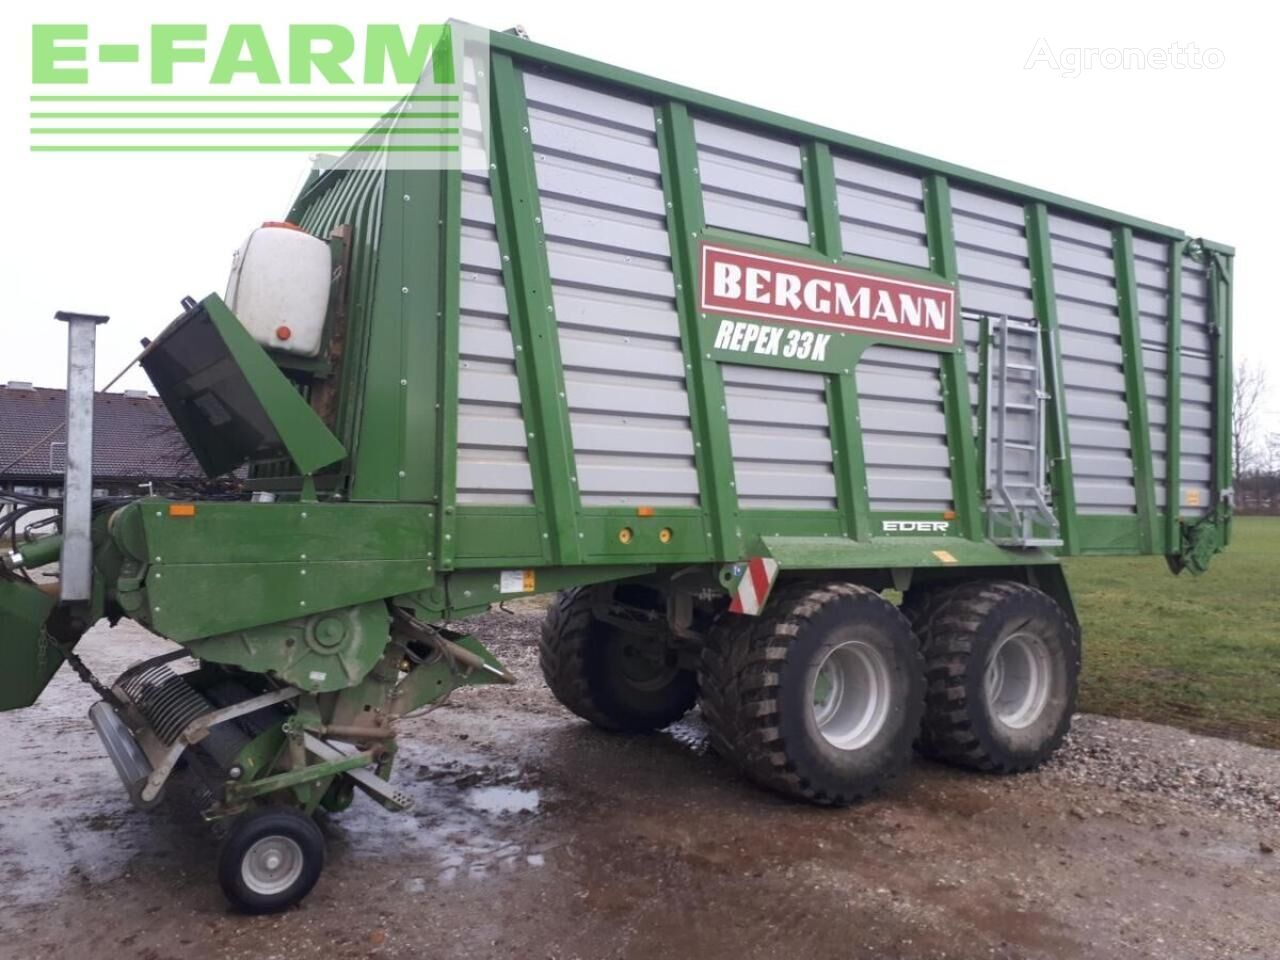 Bergmann Repex 33k self-loading wagon